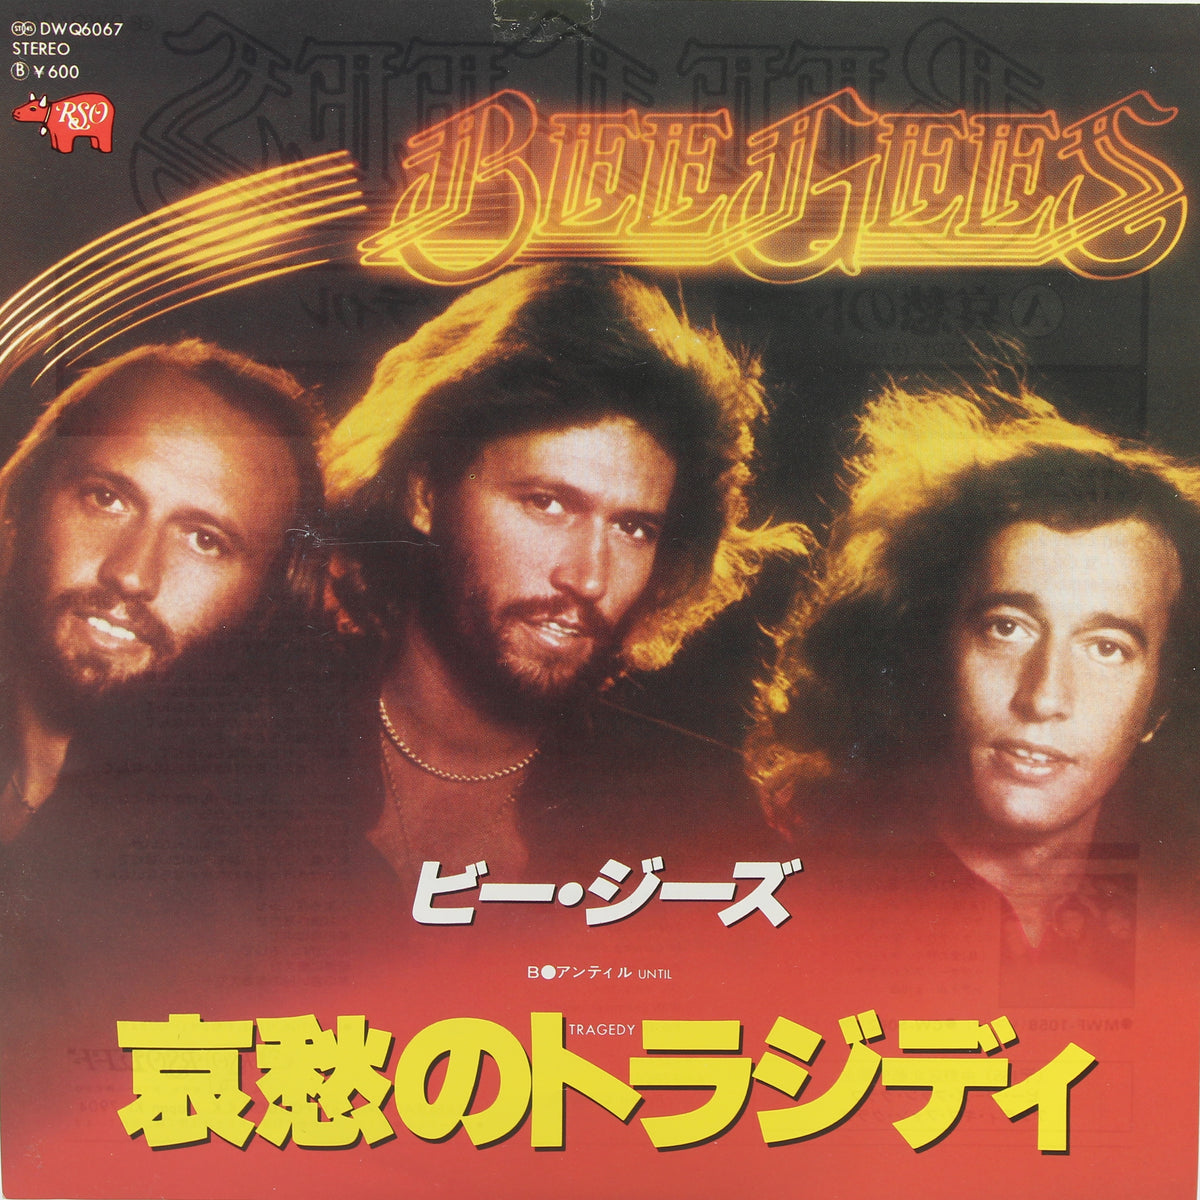 Bee Gees, Tragedy, Vinyl Single (45rpm), Japan 1979